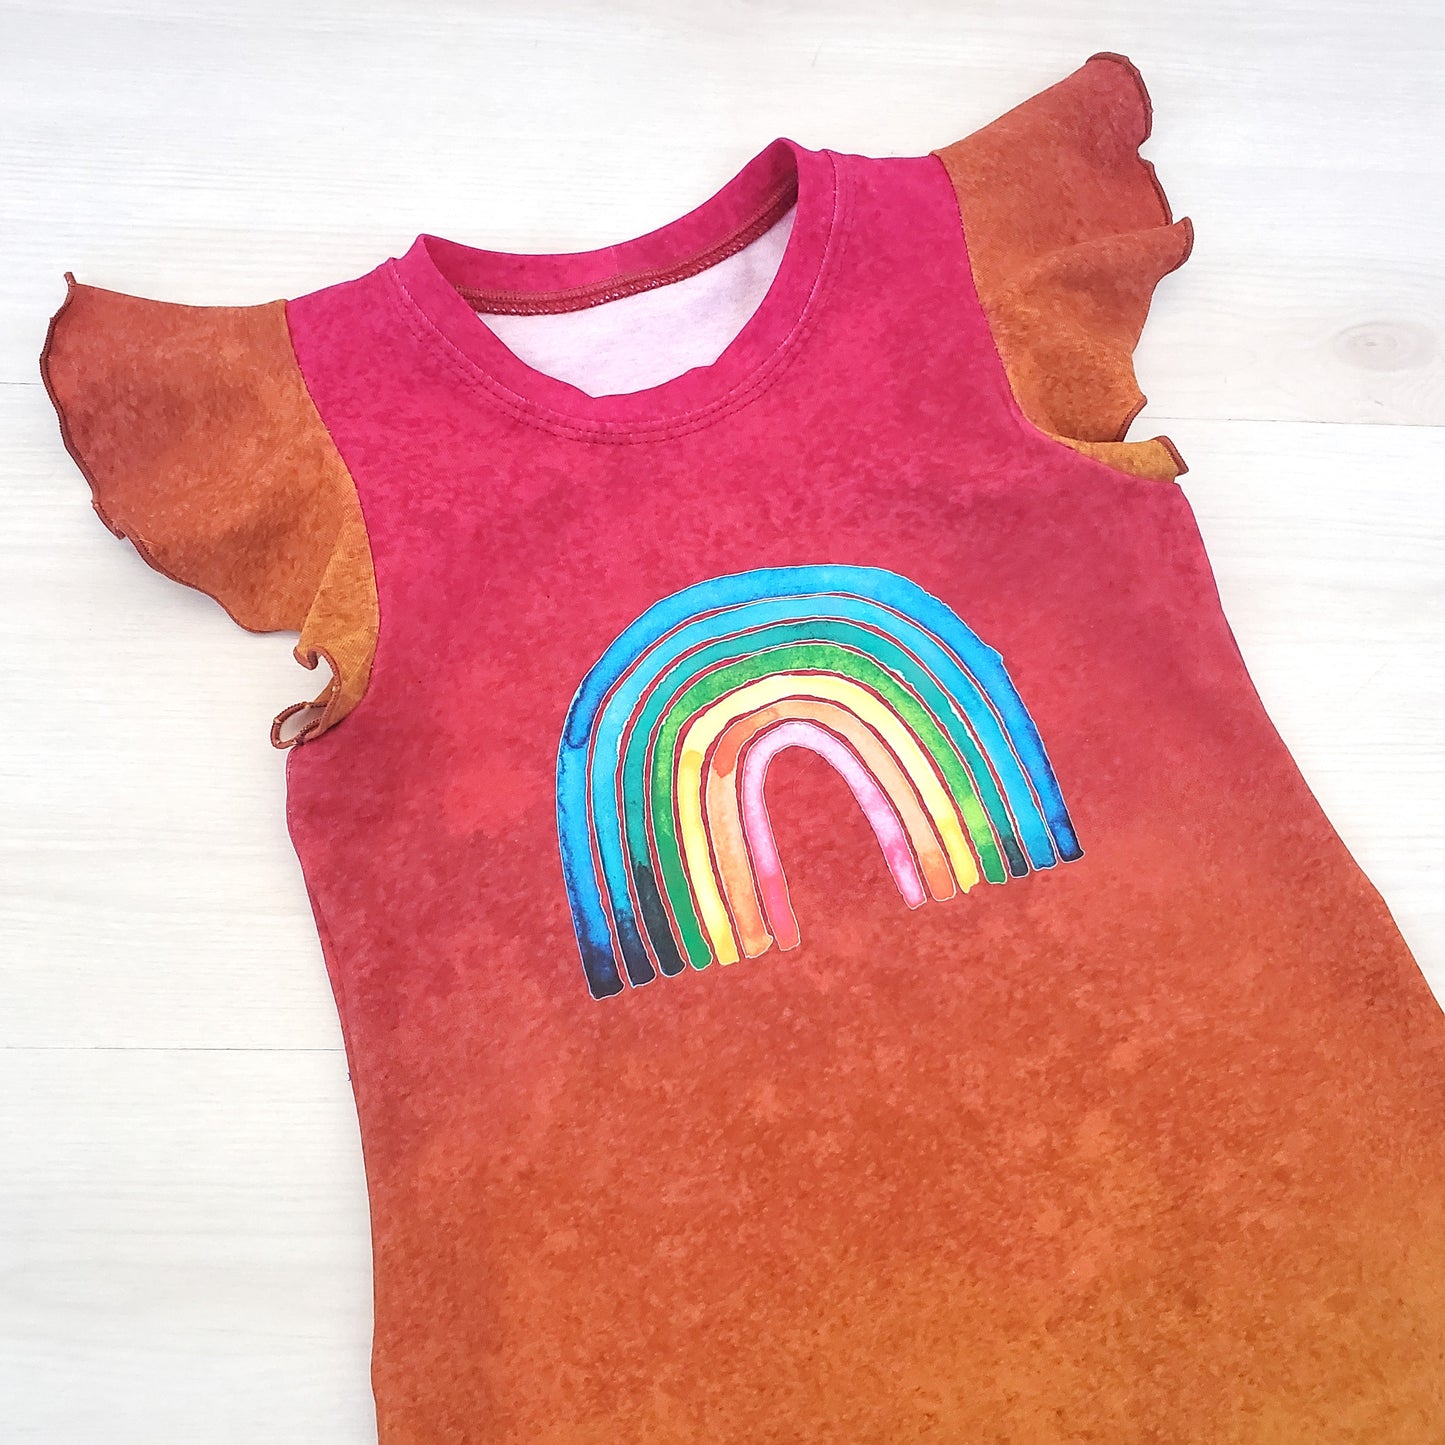 Rainbow Dress for Children